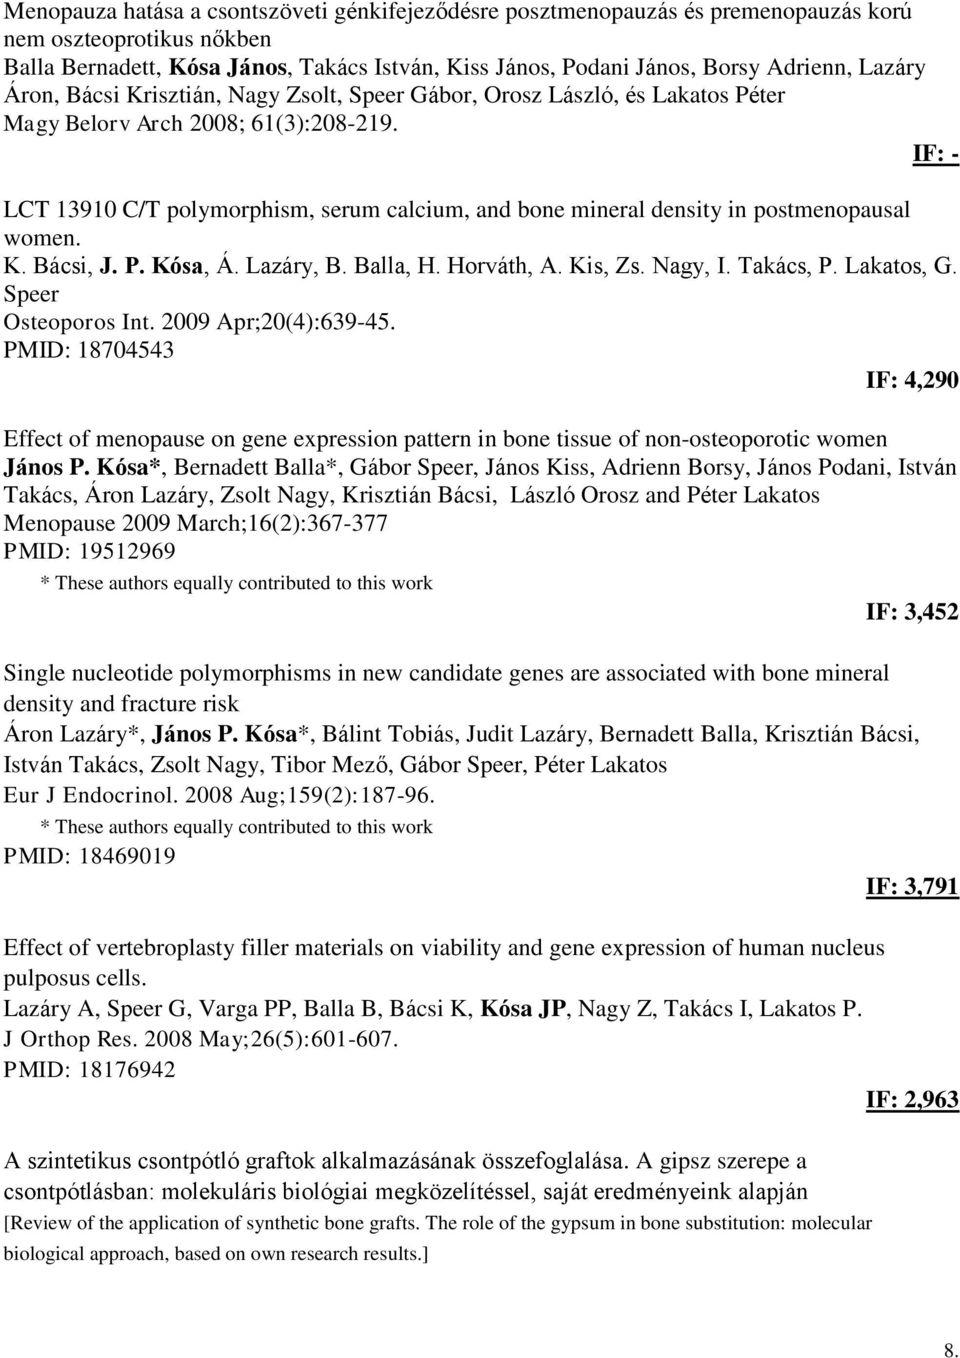 LCT 13910 C/T polymorphism, serum calcium, and bone mineral density in postmenopausal women. K. Bácsi, J. P. Kósa, Á. Lazáry, B. Balla, H. Horváth, A. Kis, Zs. Nagy, I. Takács, P. Lakatos, G.